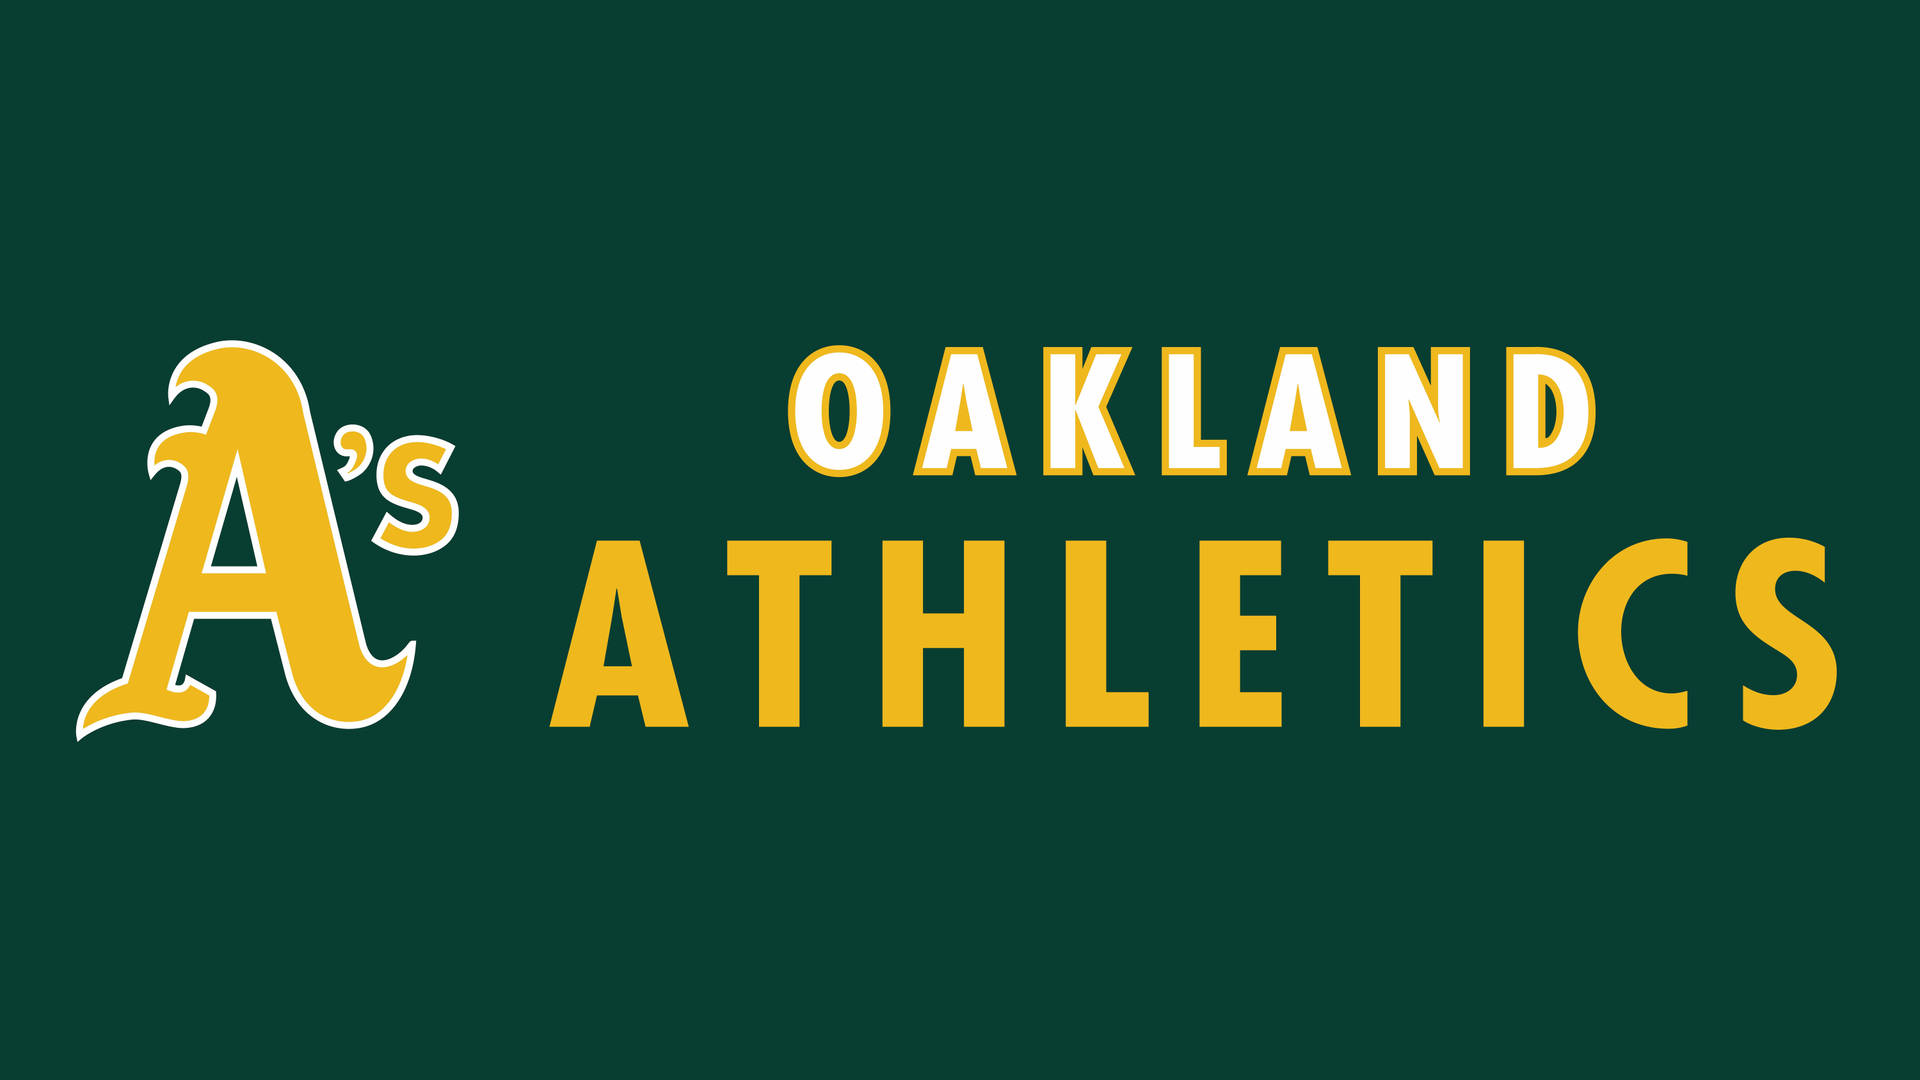 Oakland Atletik Simple Wallpaper